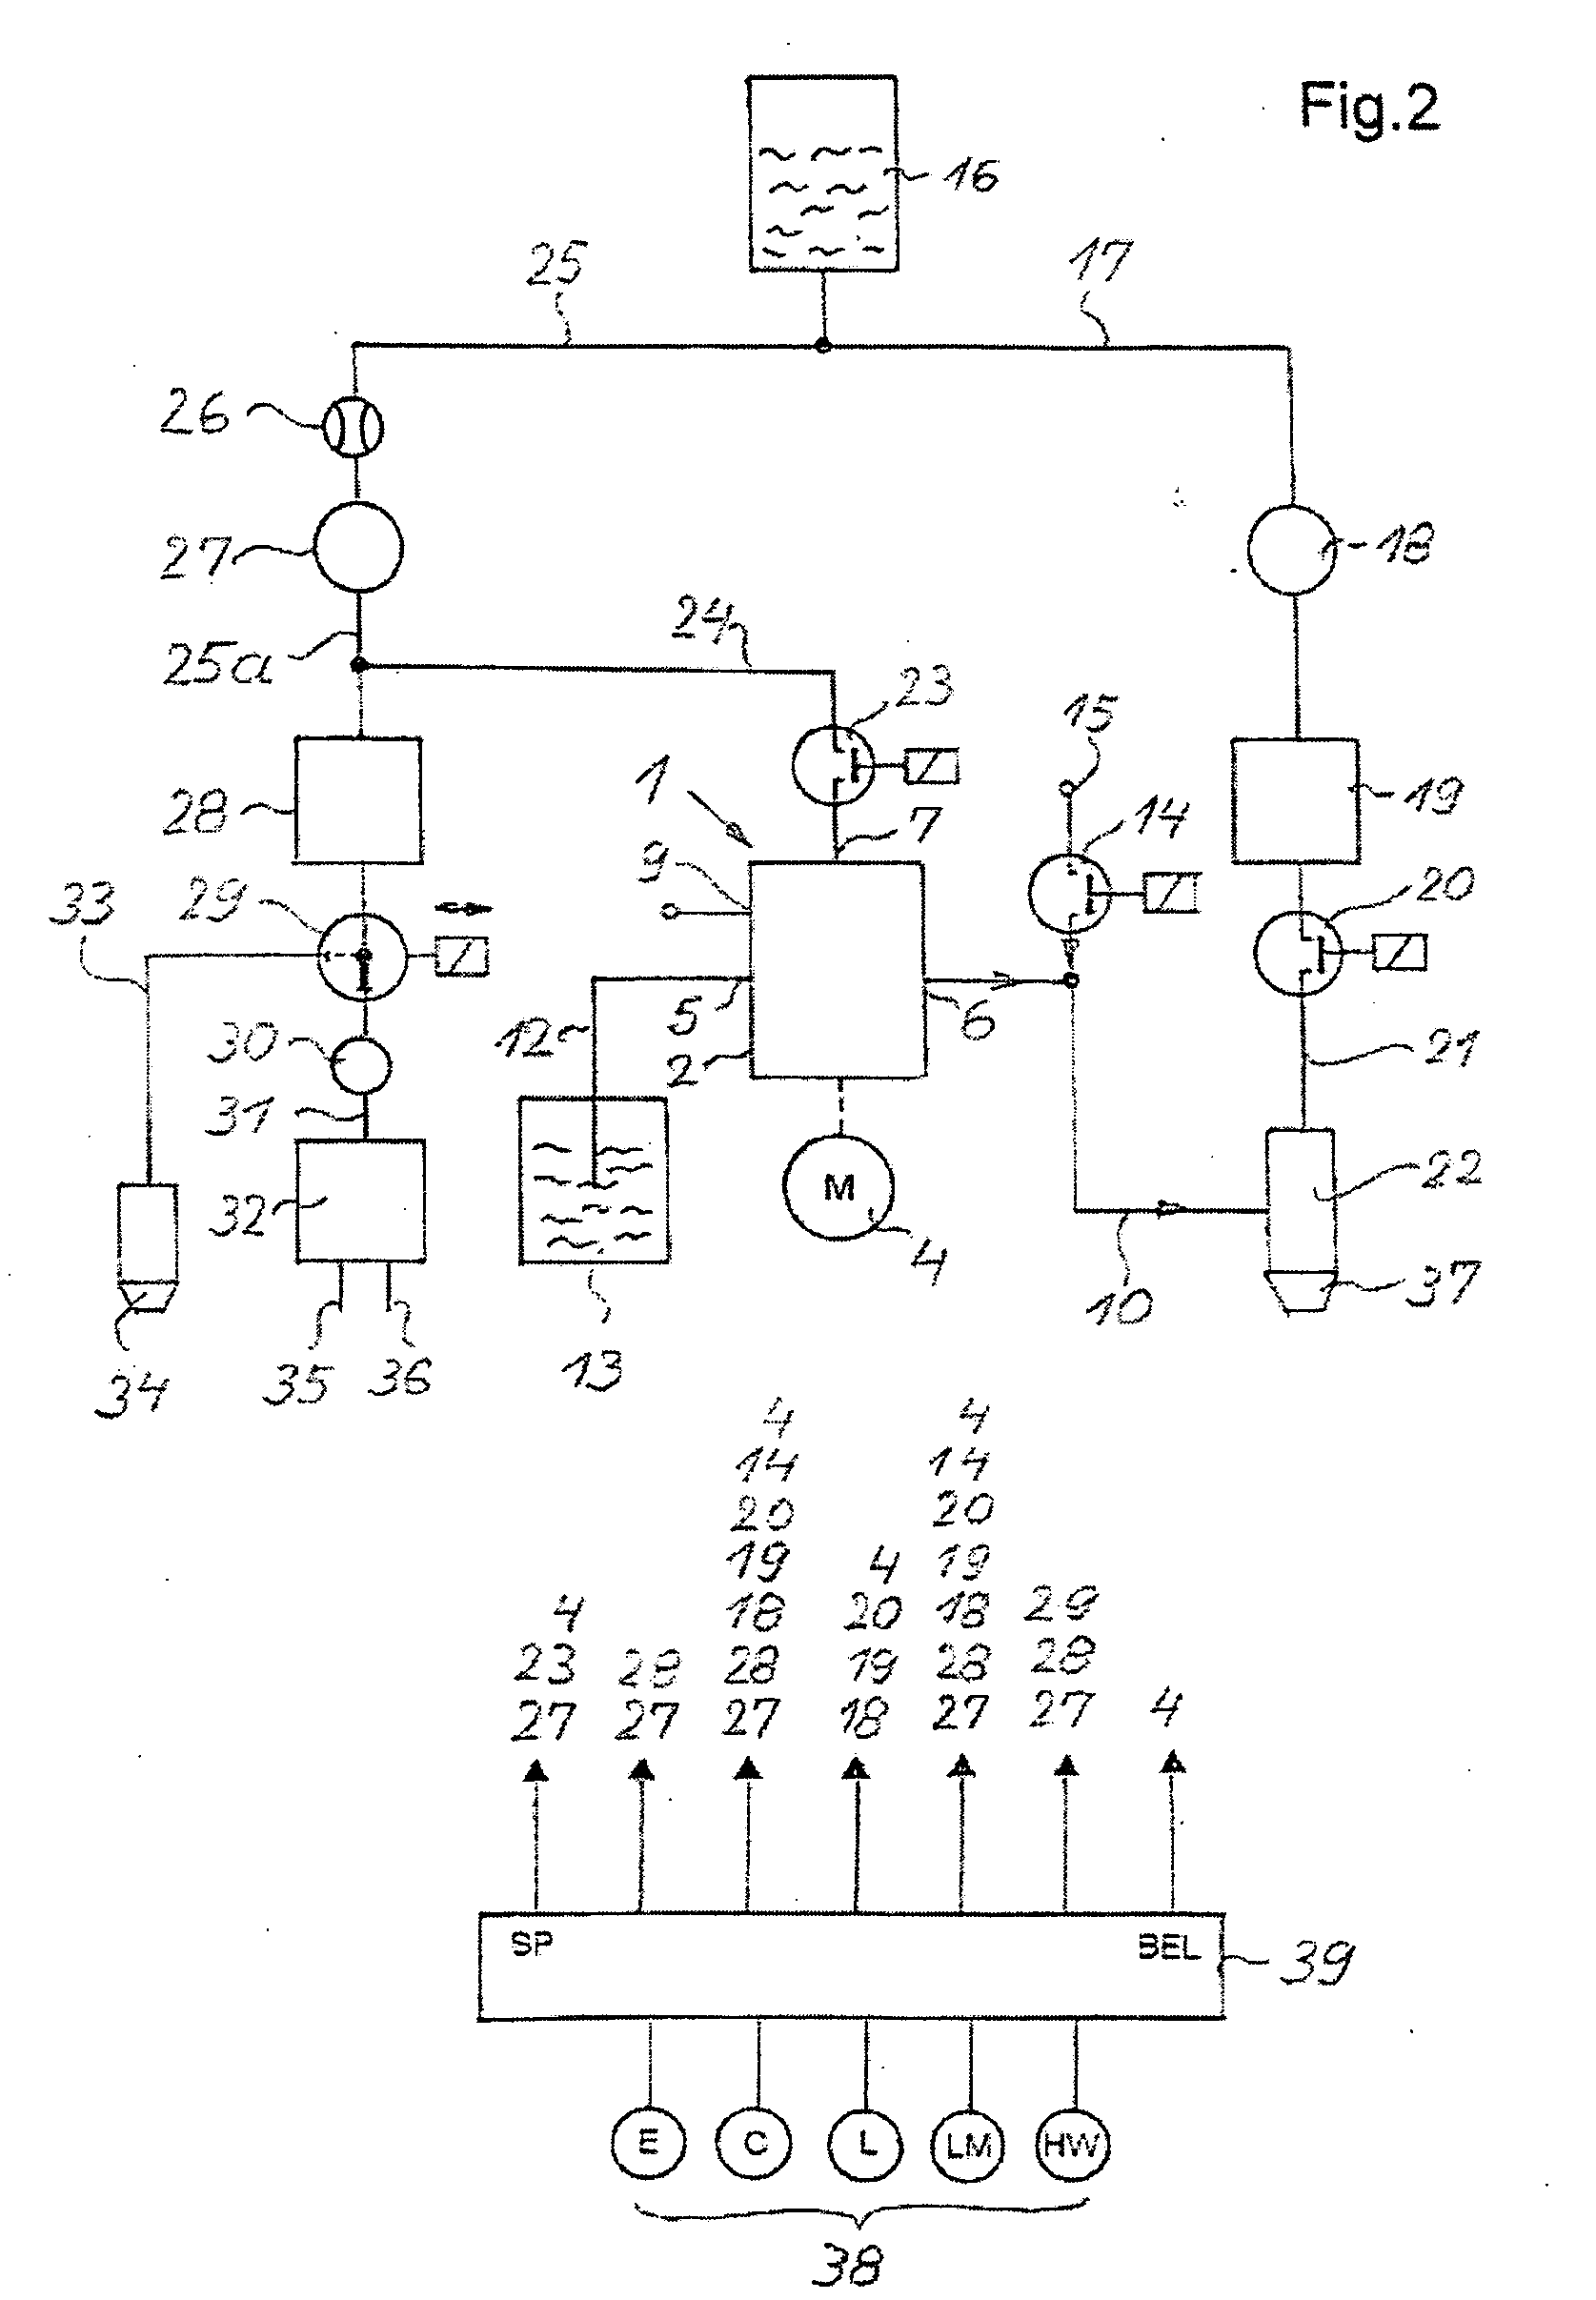 Multi-path valve arrangement in a beverage making unit